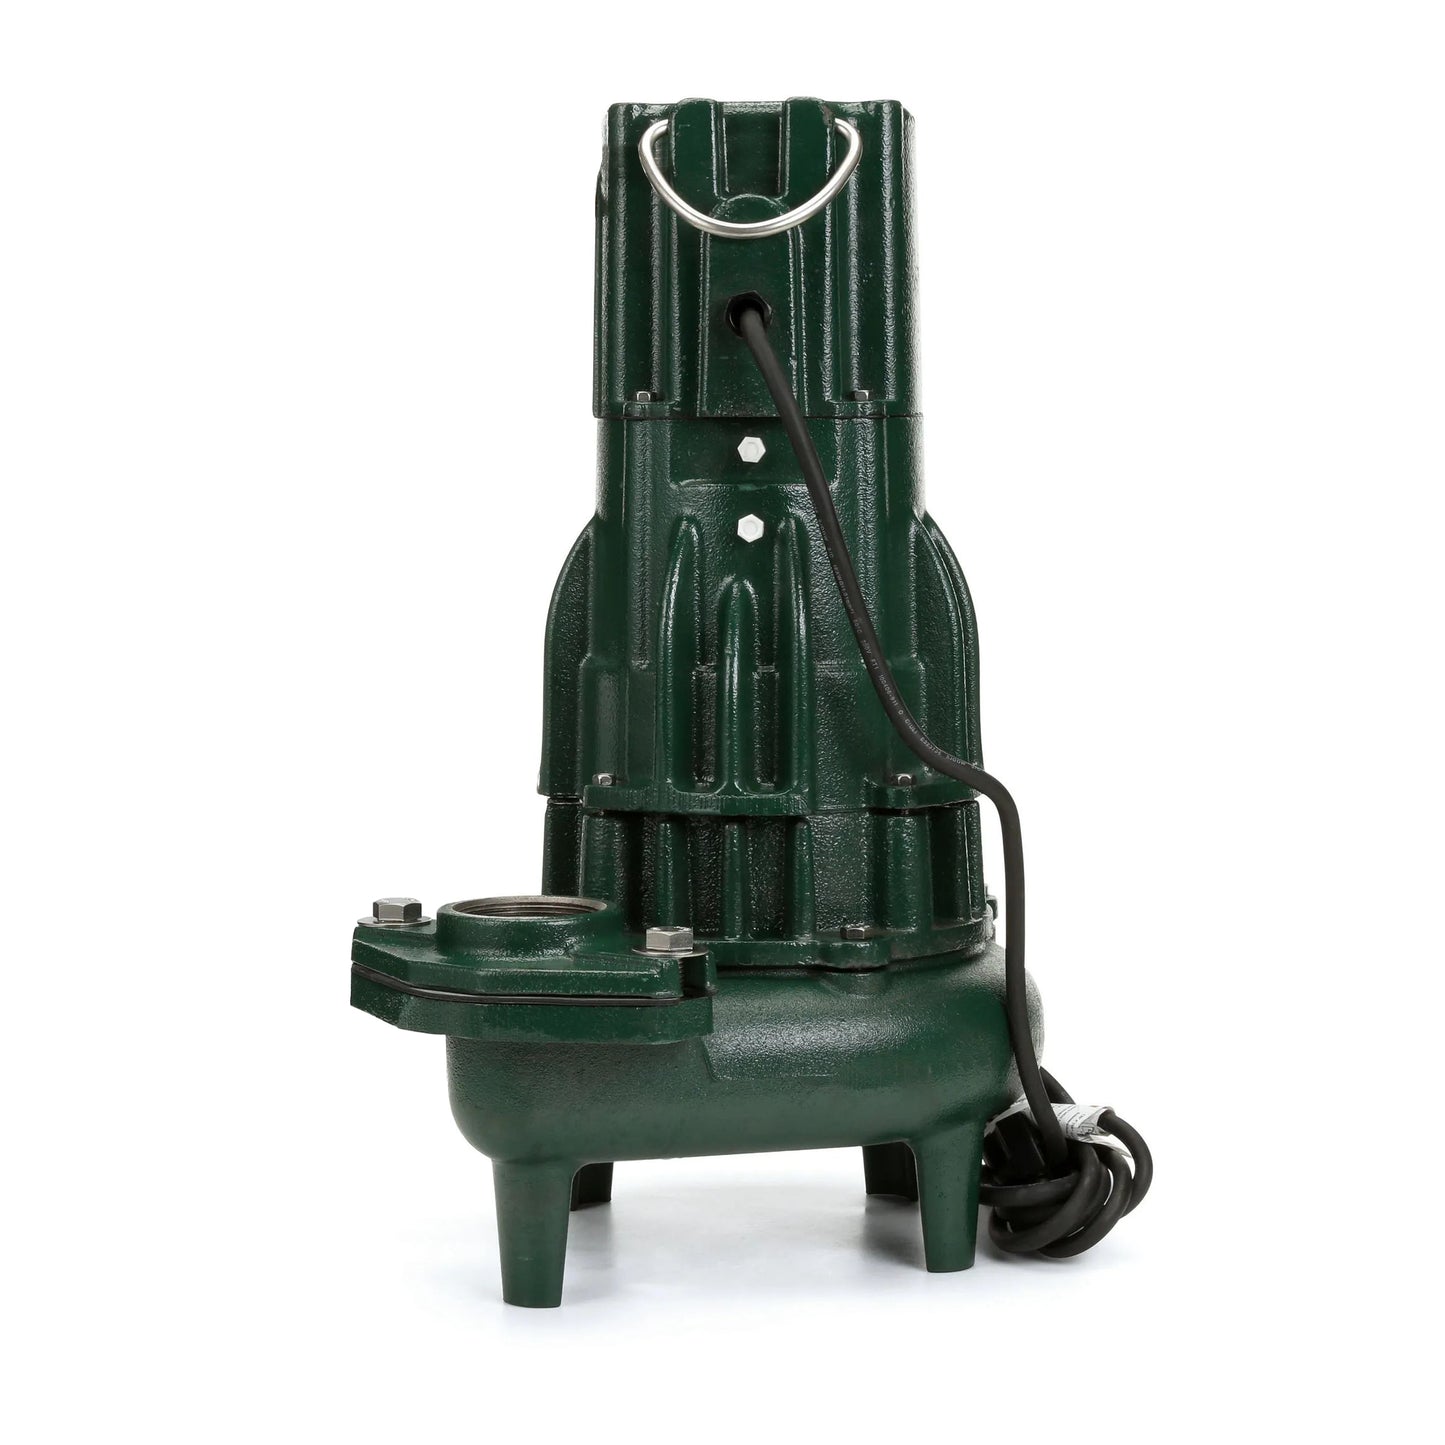 284-0004 - E284 Series Non-Automatic Cast Iron Sewage Pump, 230V, 1 HP